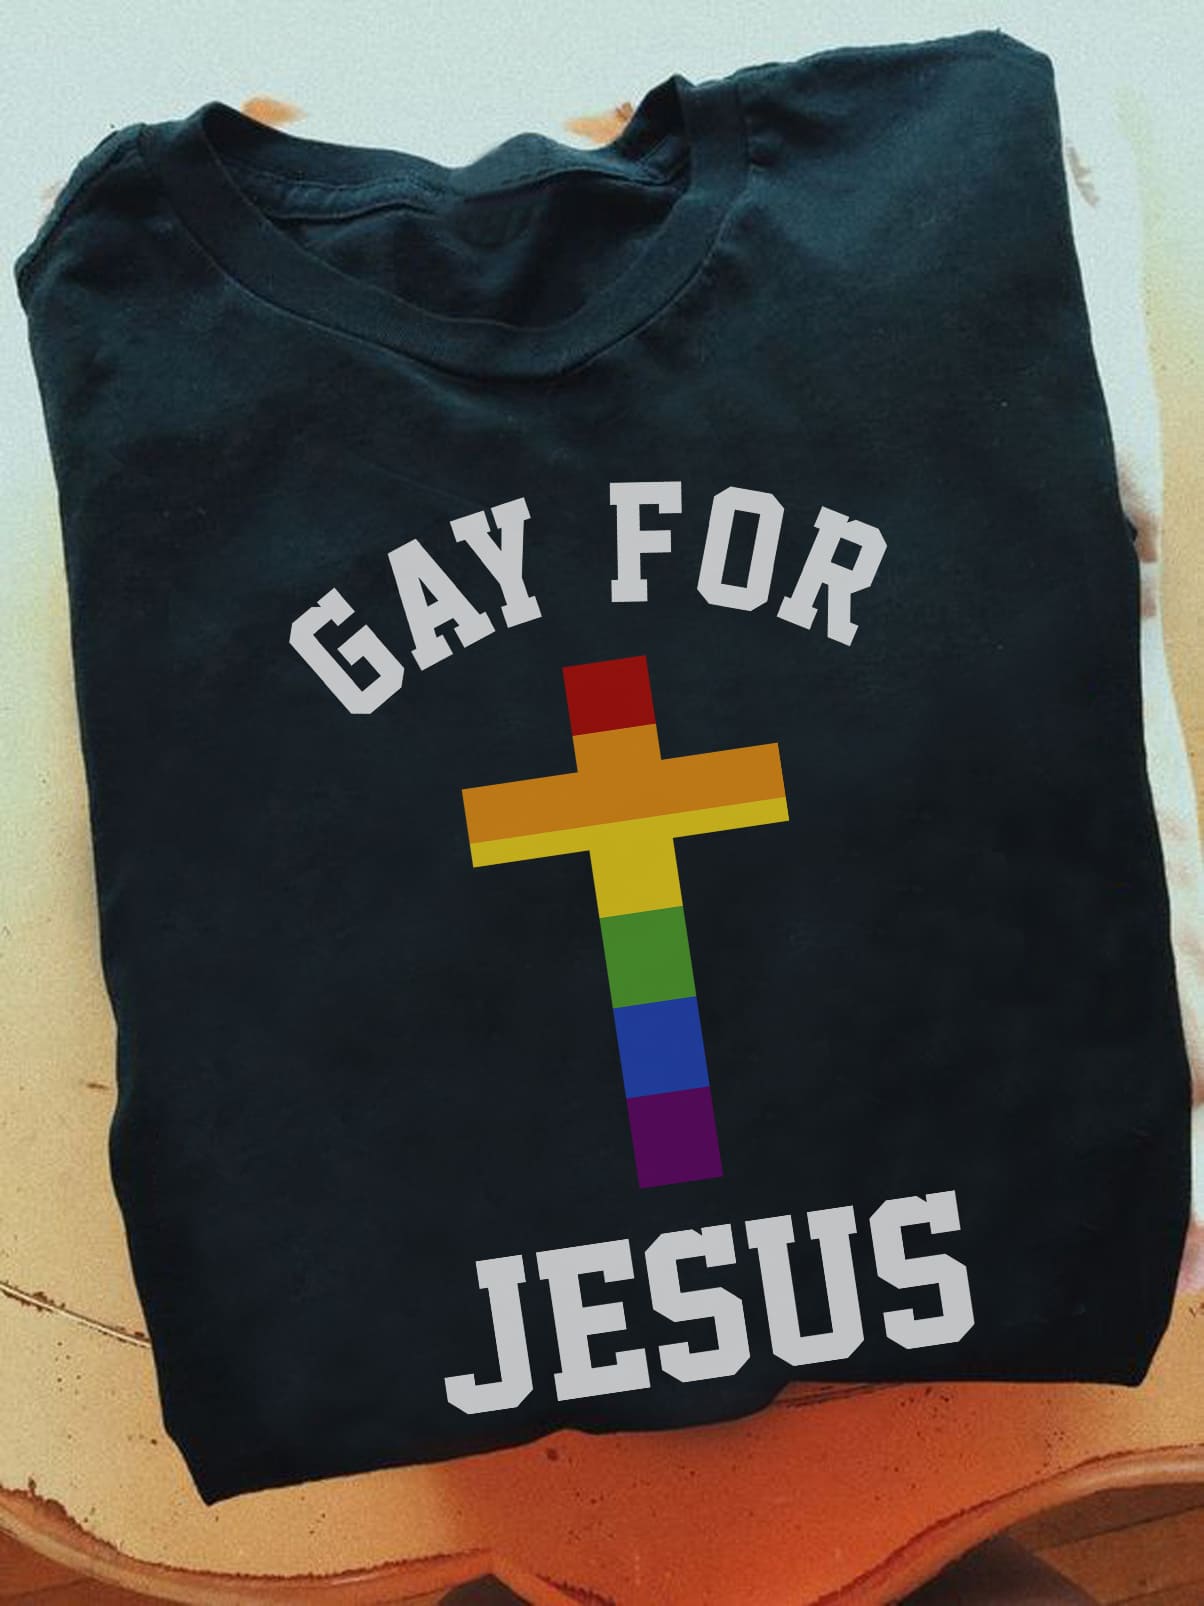 Gay for Jesus - Gift for lgbt community, Believe in Jesus